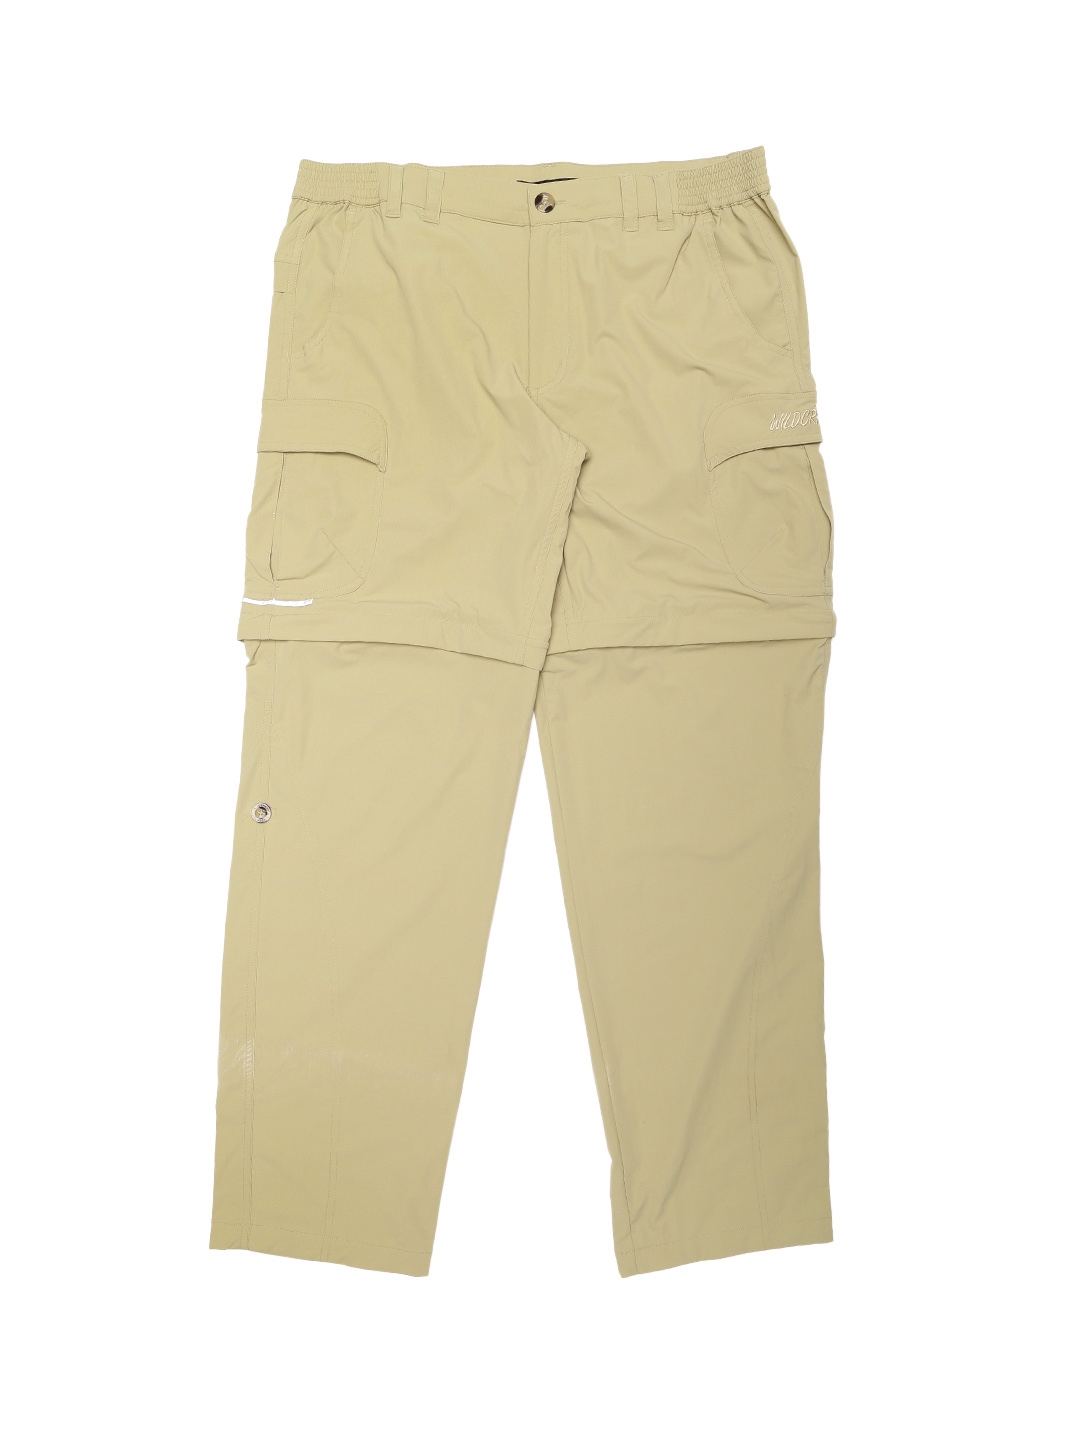 Buy FlatFront Bermuda Shorts with Cargo Pockets online  Looksgudin